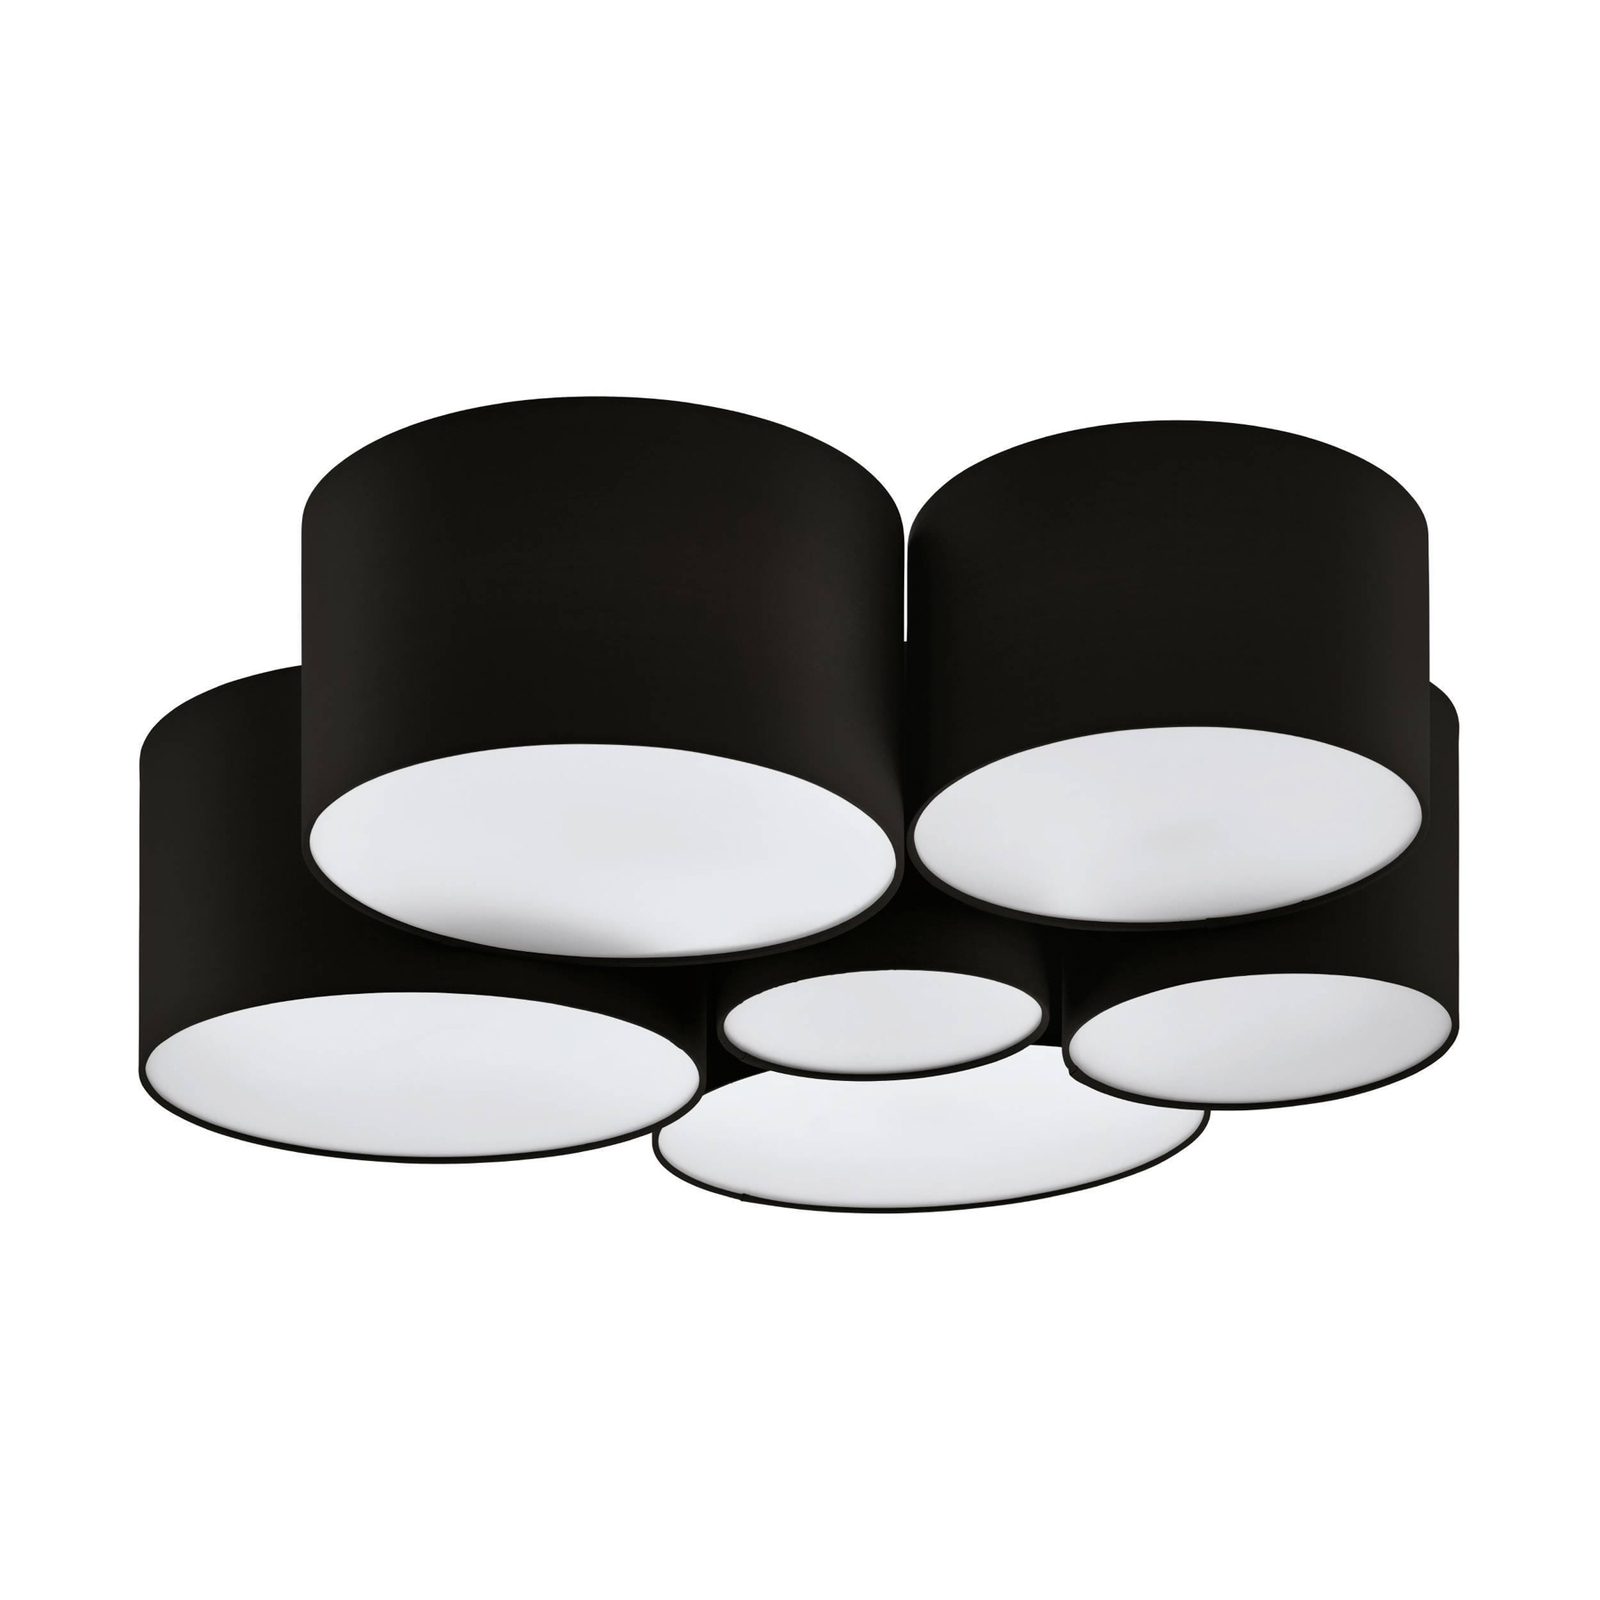 Taklampe Pastore 2, Ø 99 cm, svart, 6 lyskilder, stoff